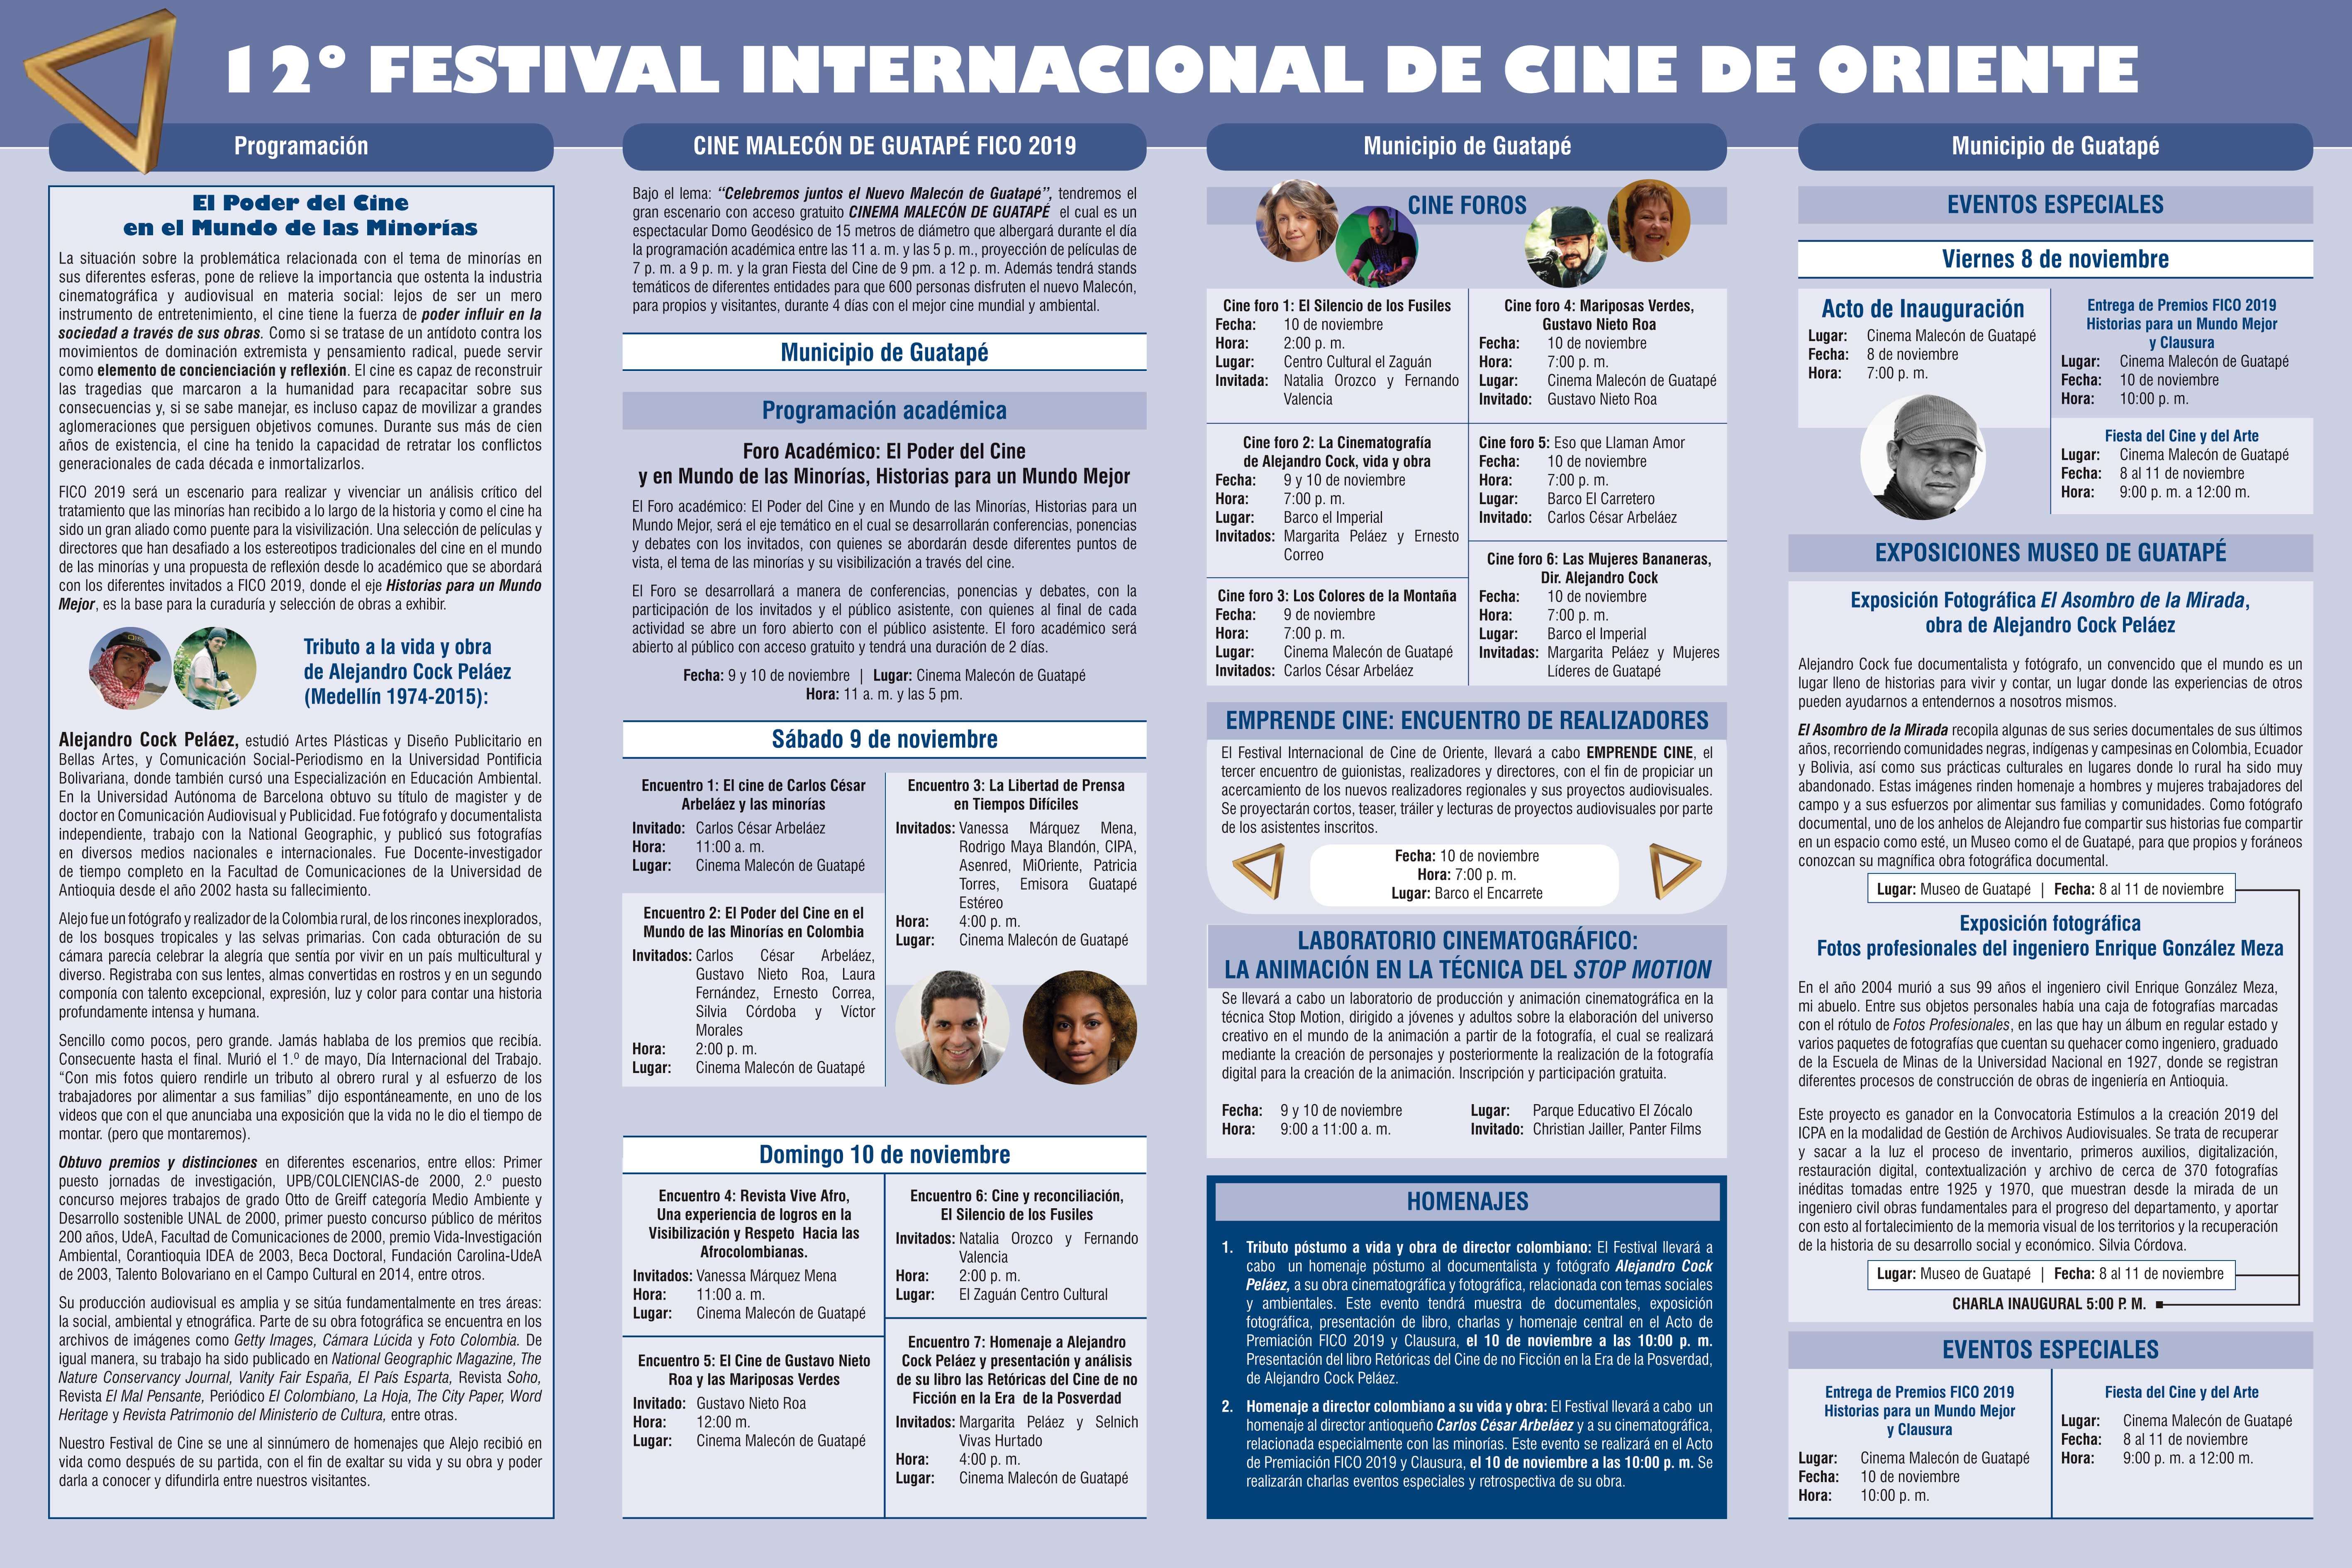 PLEG FESTIVAL DE CINE ORIENTE 19 WEB 2 1 1